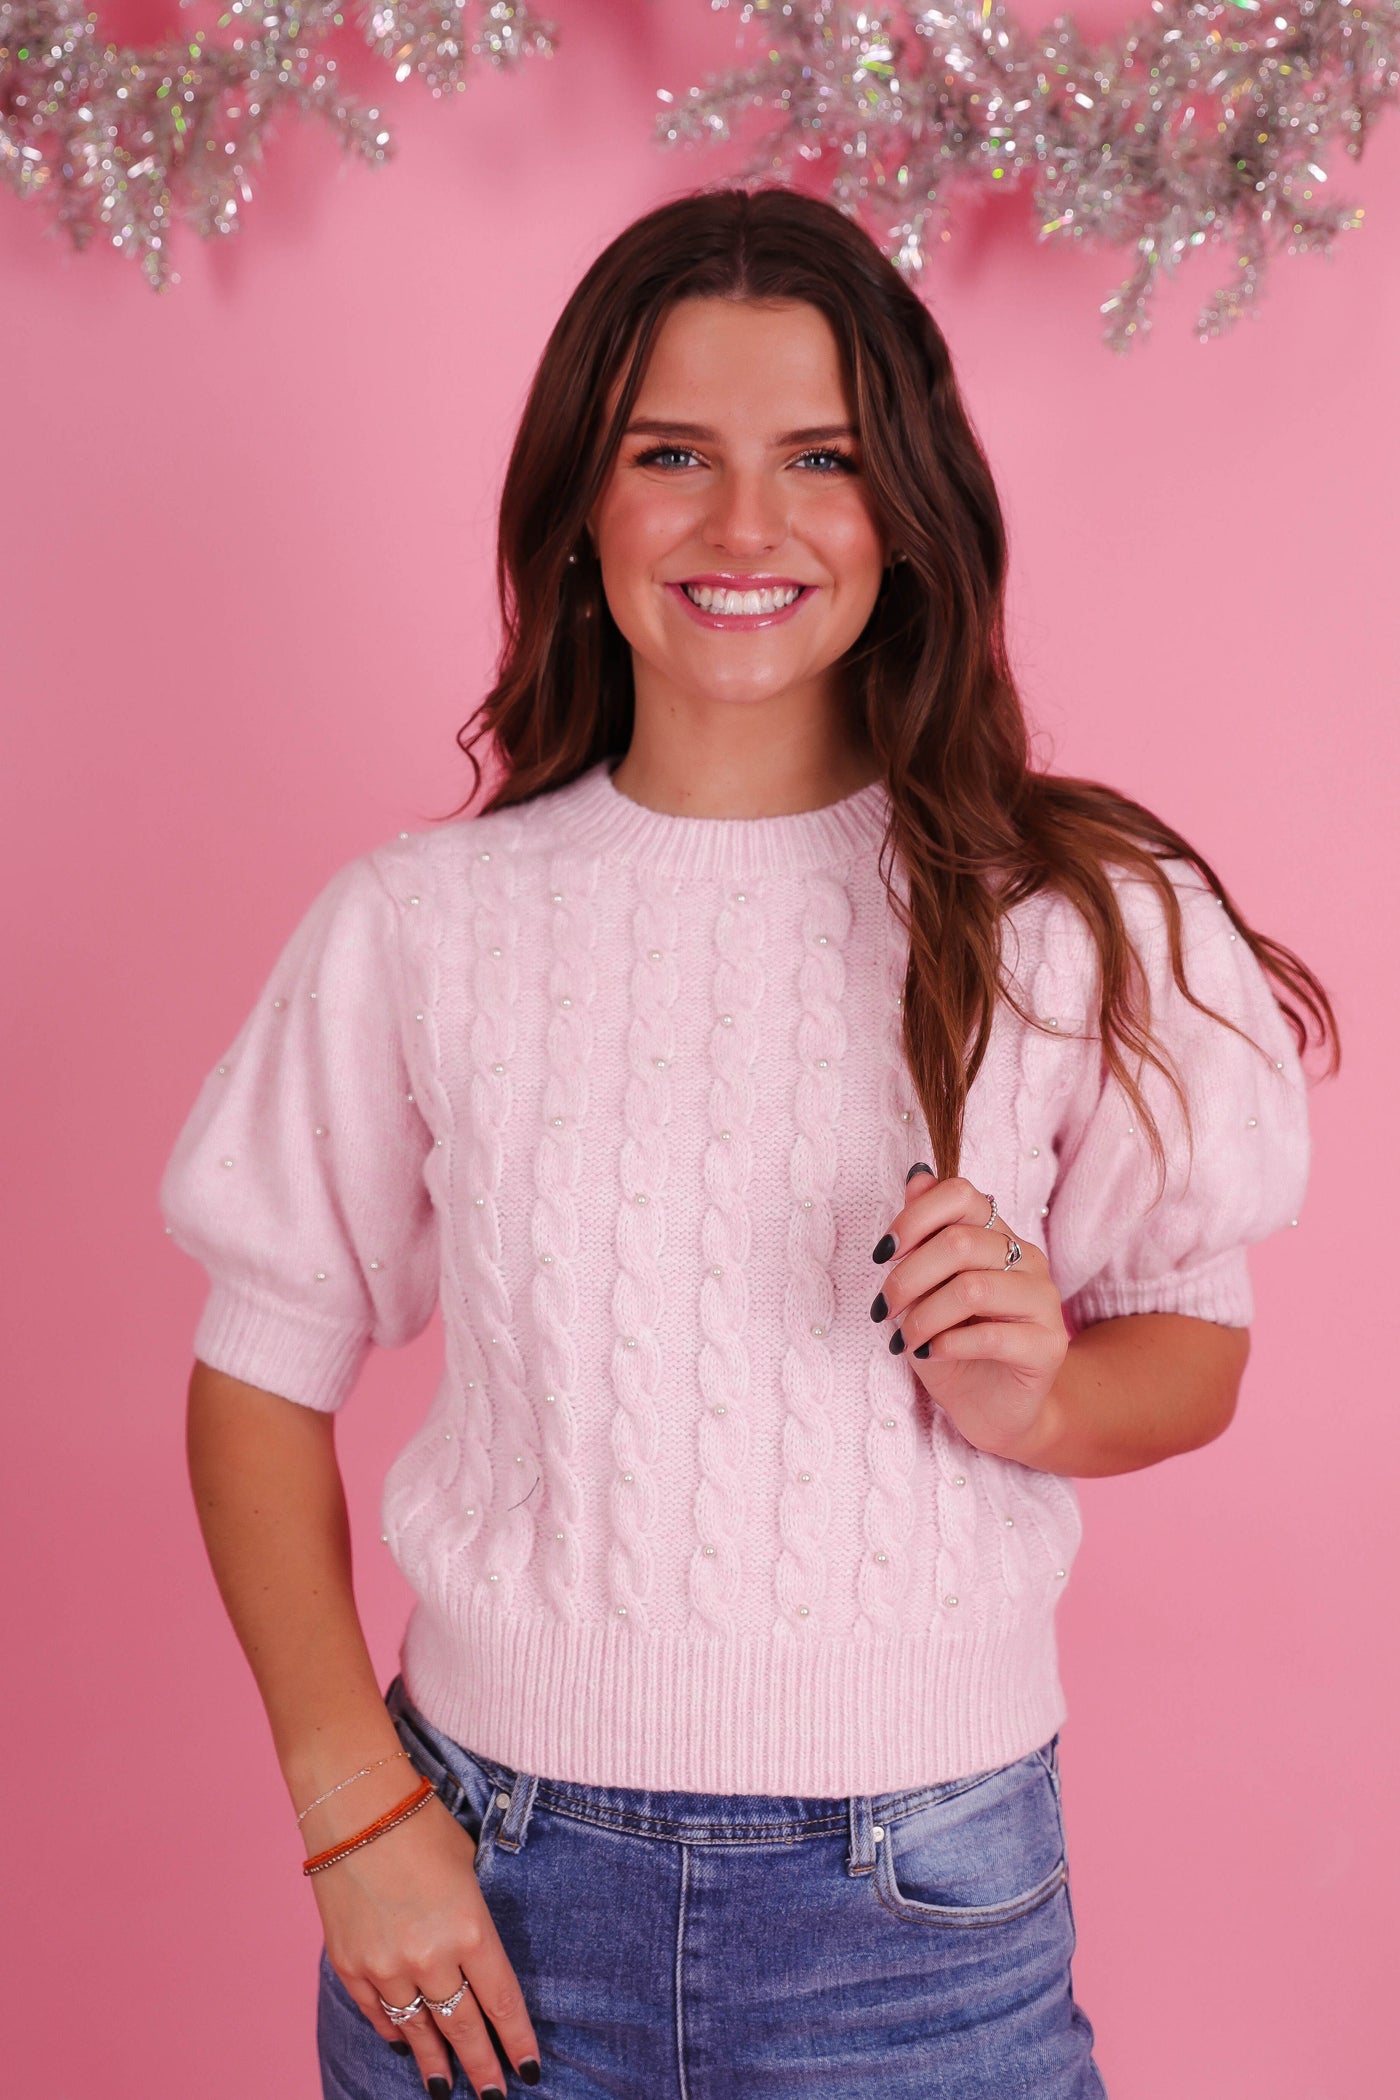 Women's Soft Pink Sweater- Women's Pearl Pink Sweater- She + Sky Sweaters